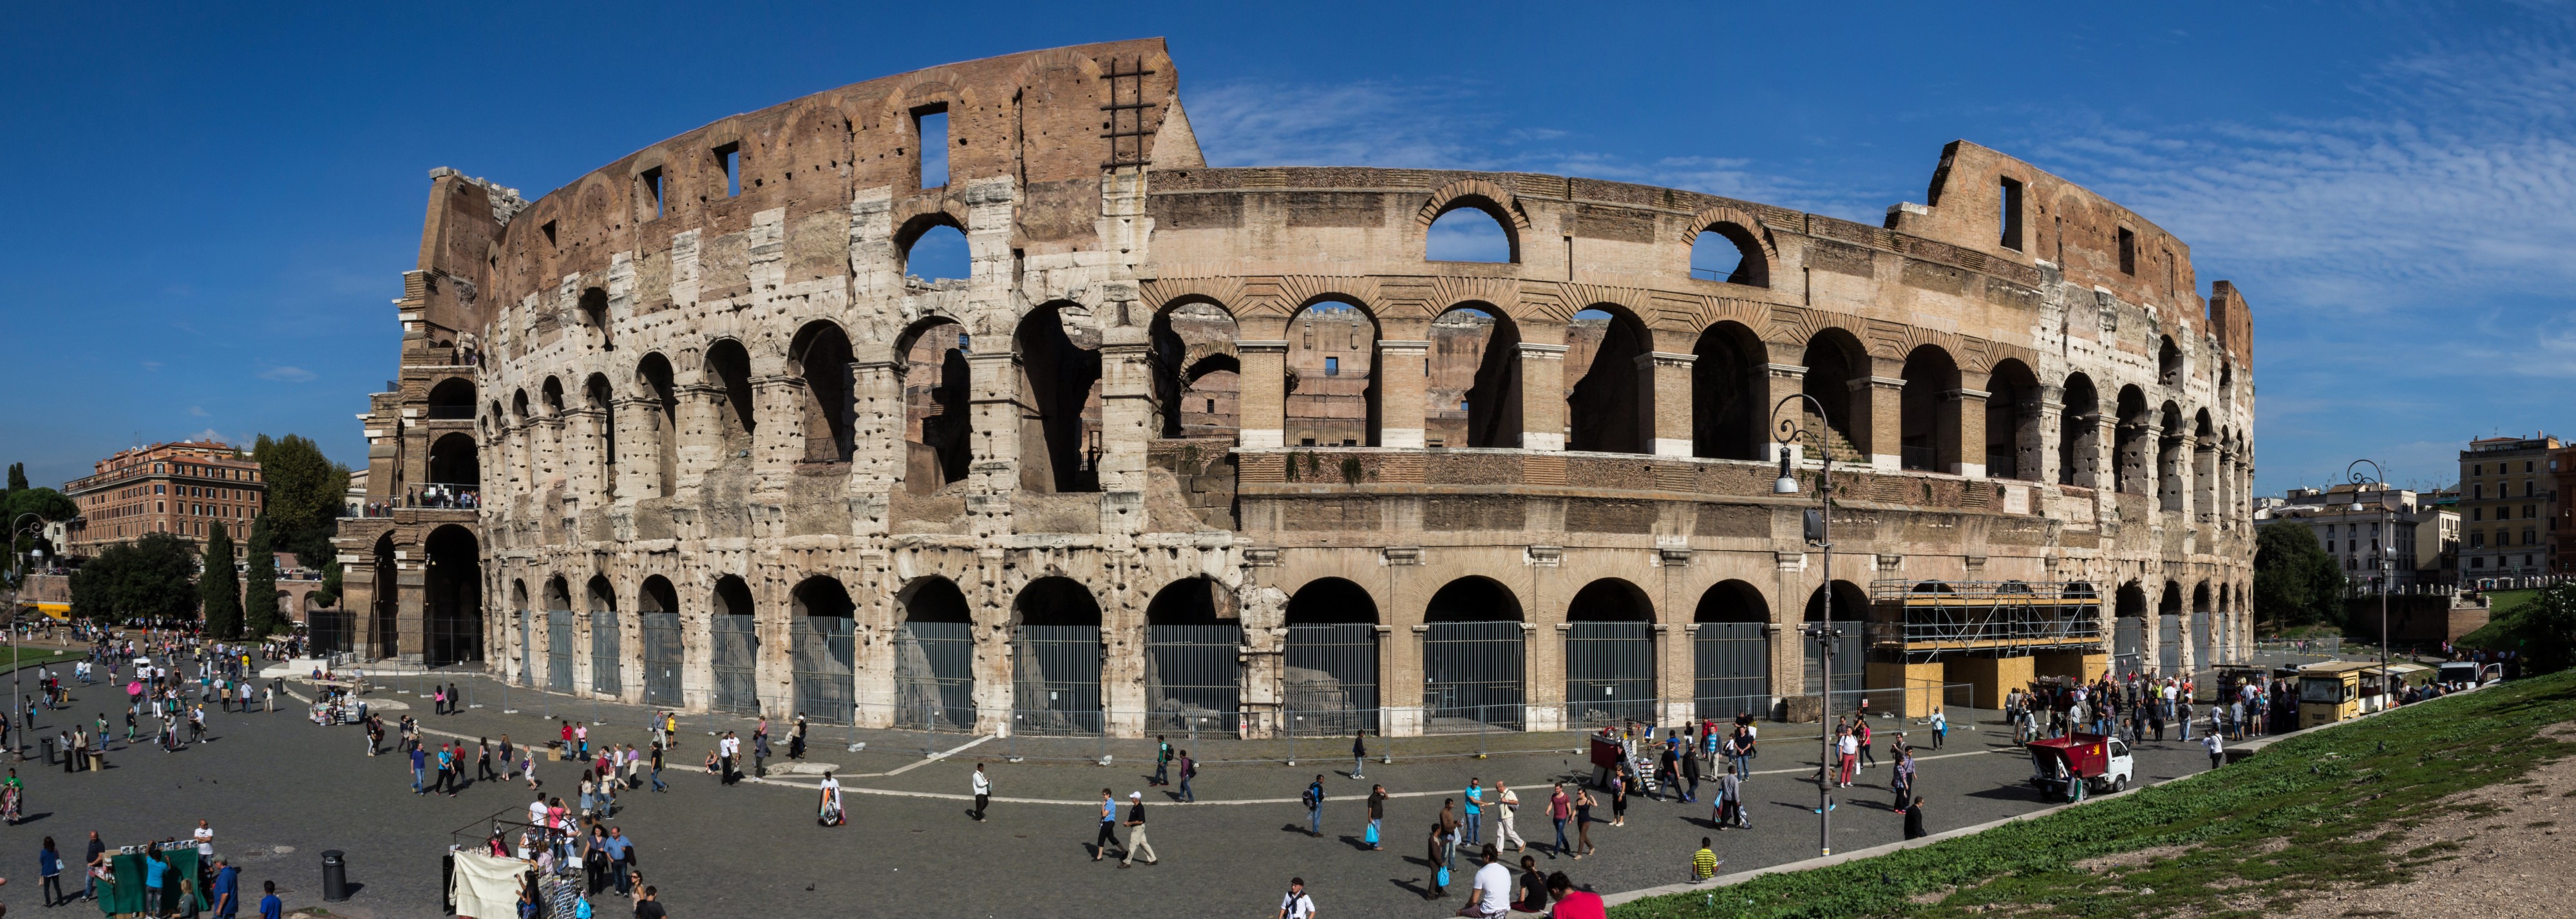 Rome (IT), Kolosseum -- 2013 -- 3373